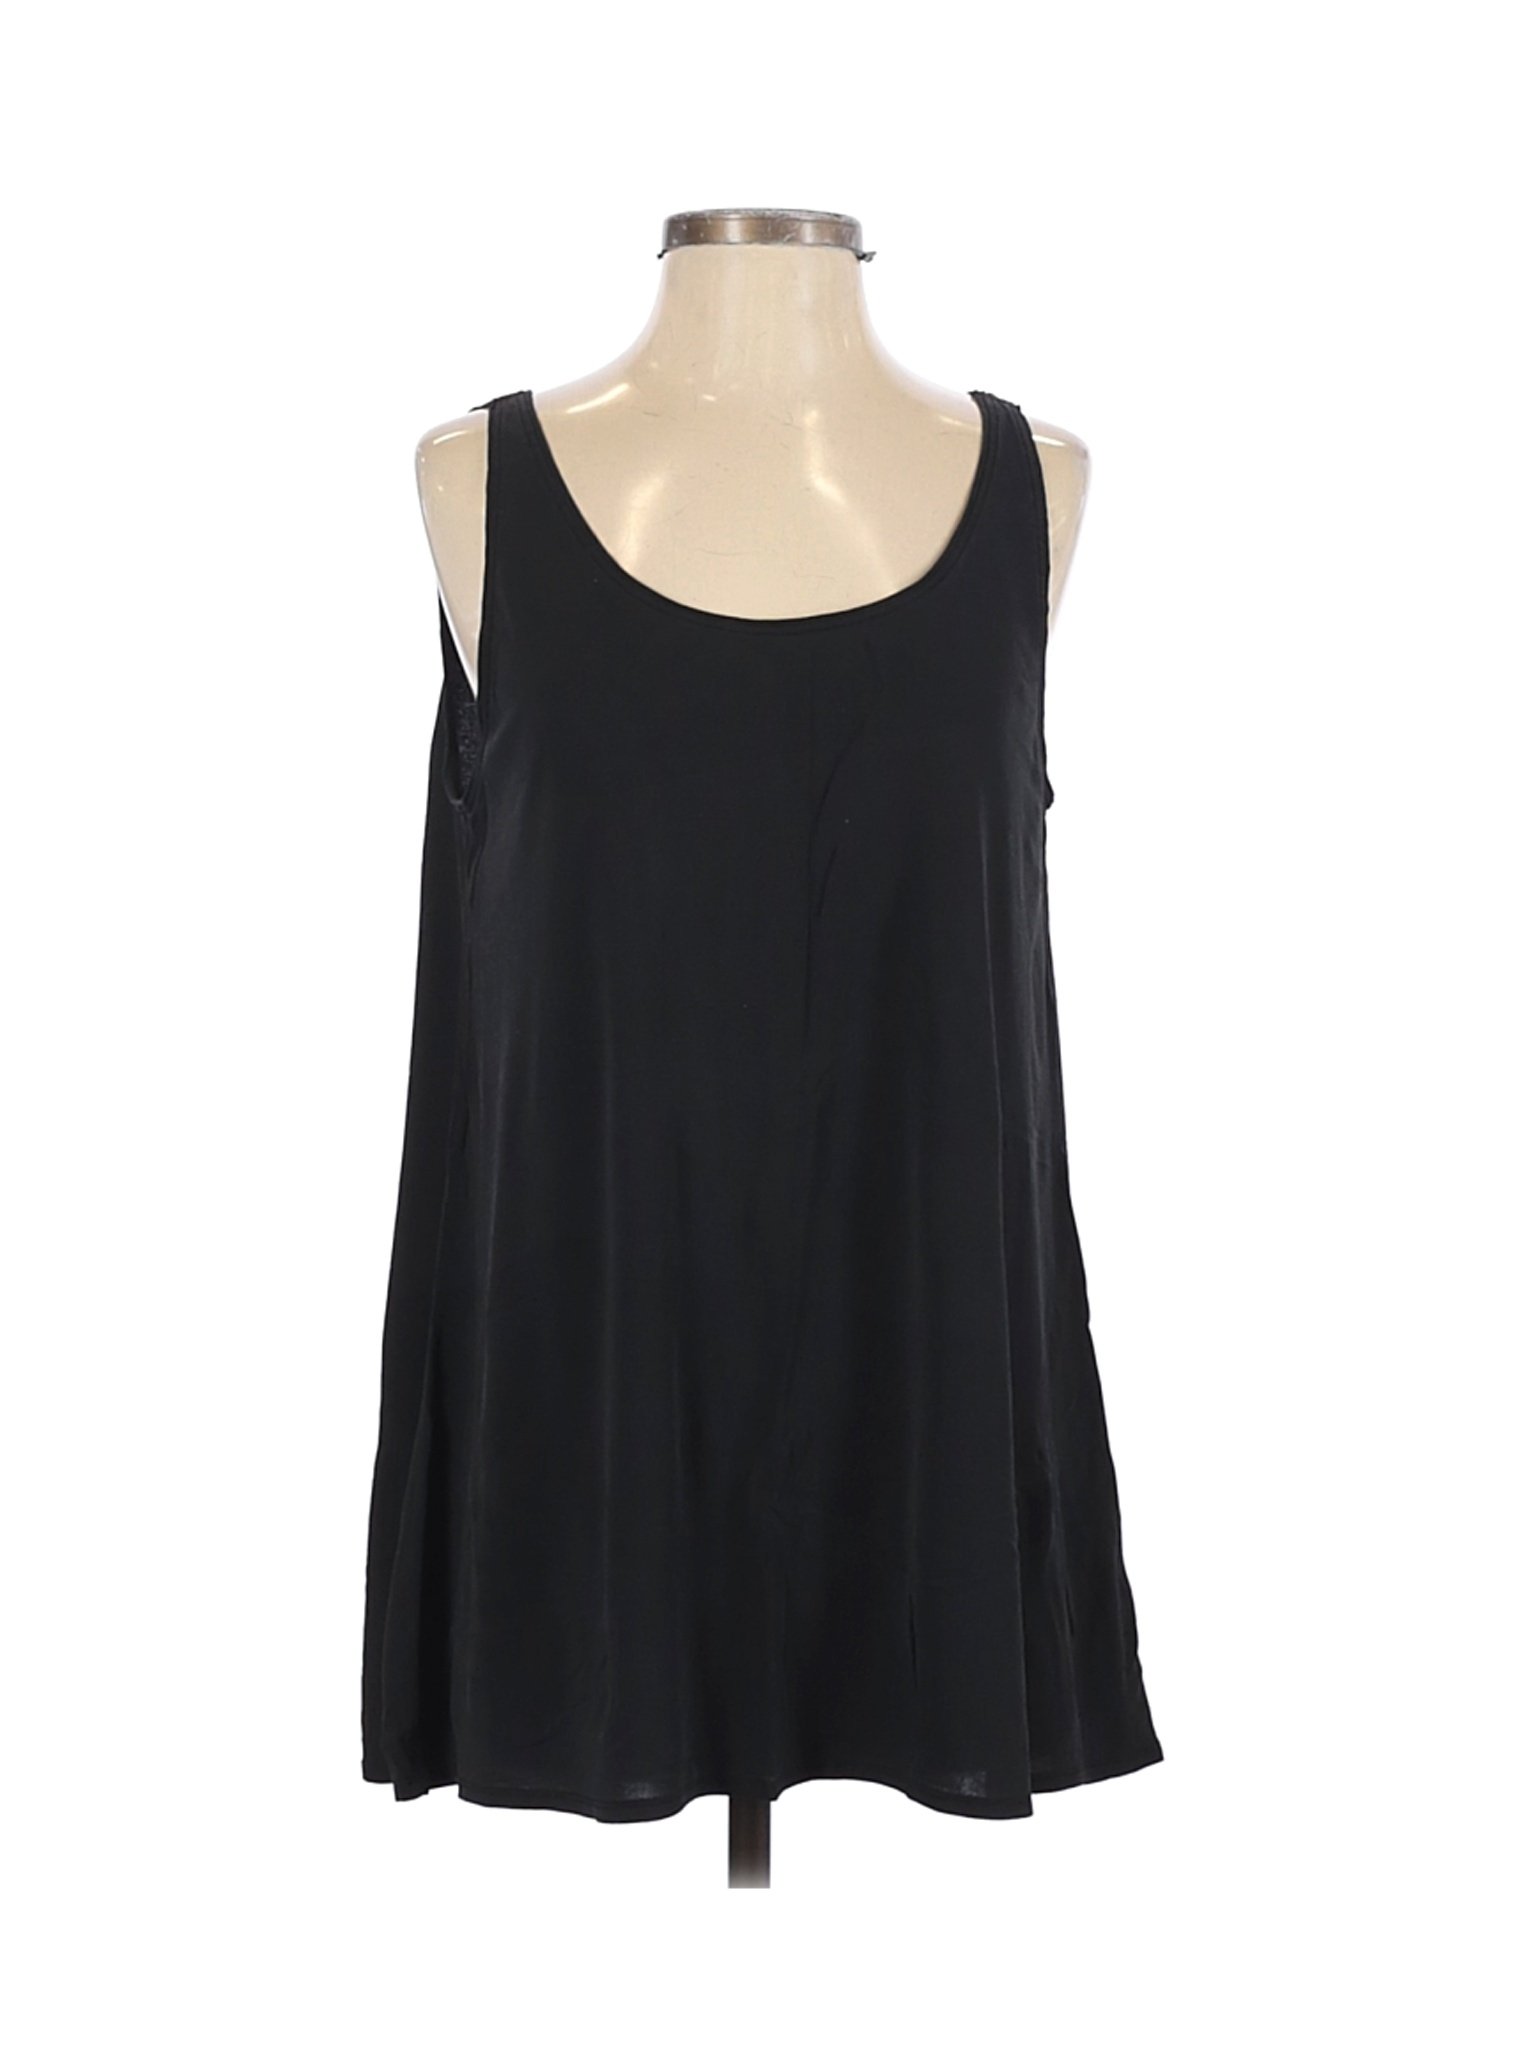 Eileen Fisher Women Black Sleeveless Silk Top M | eBay